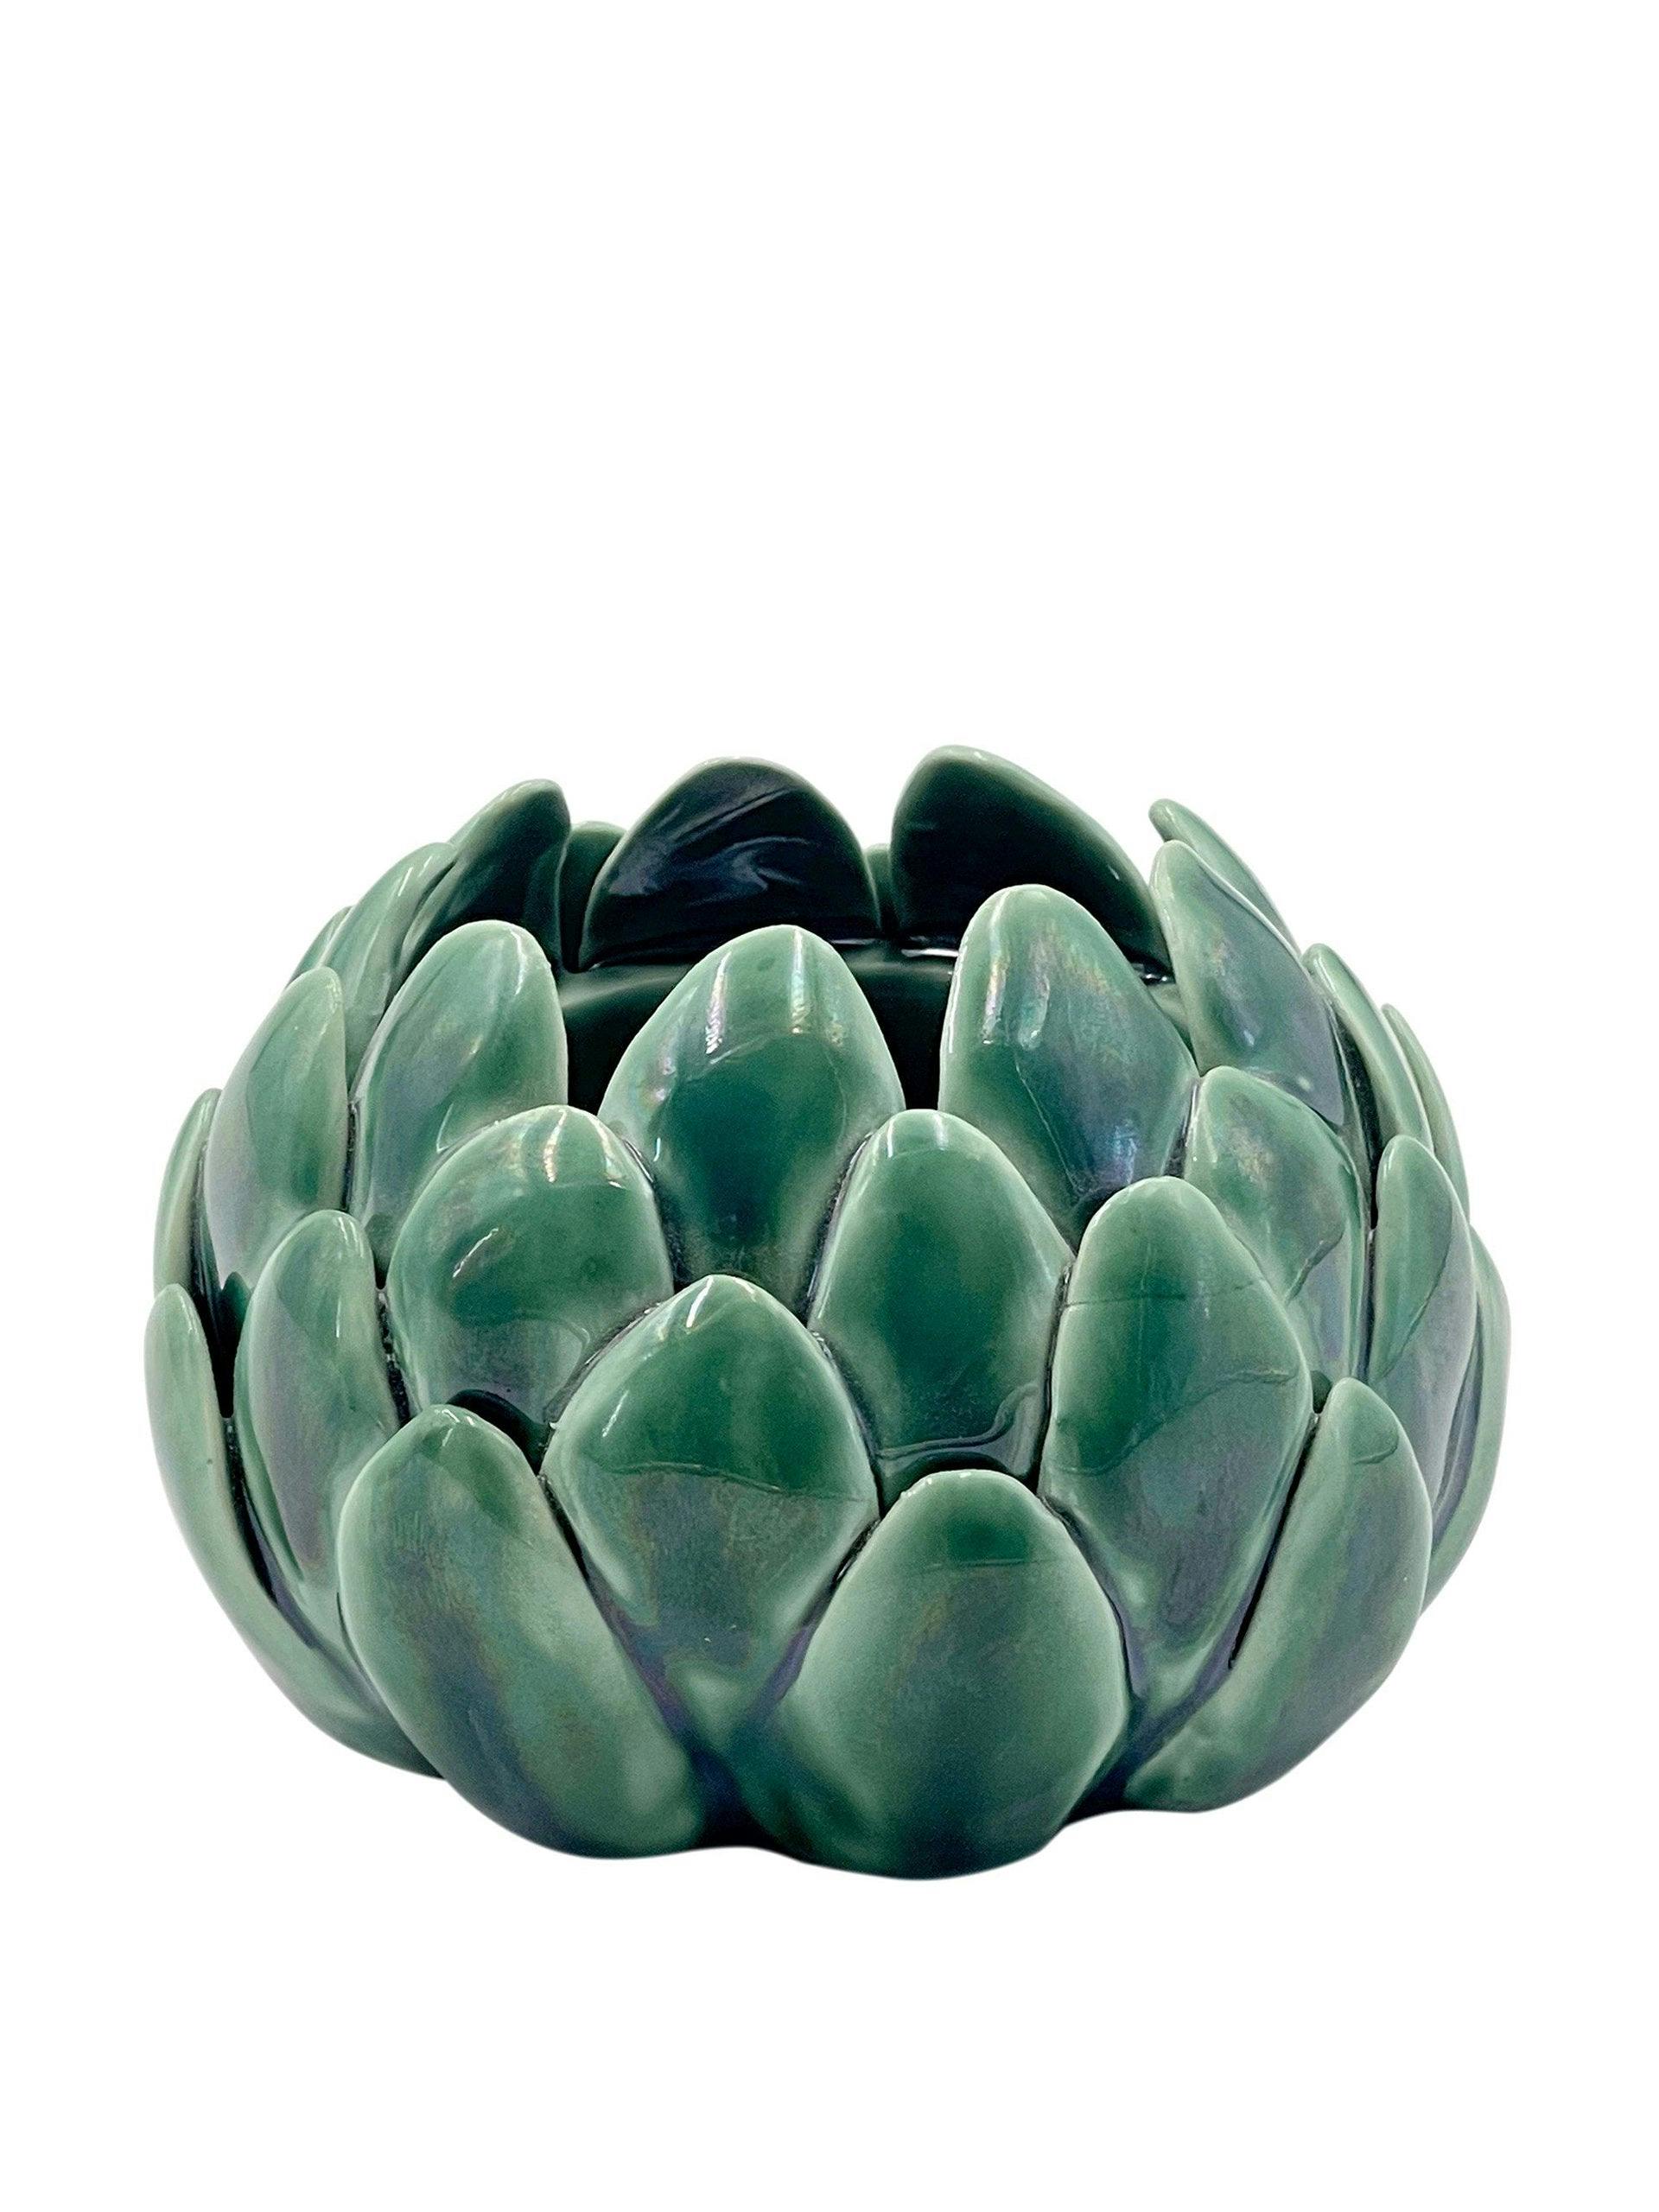 Artichoke bowl in green, small